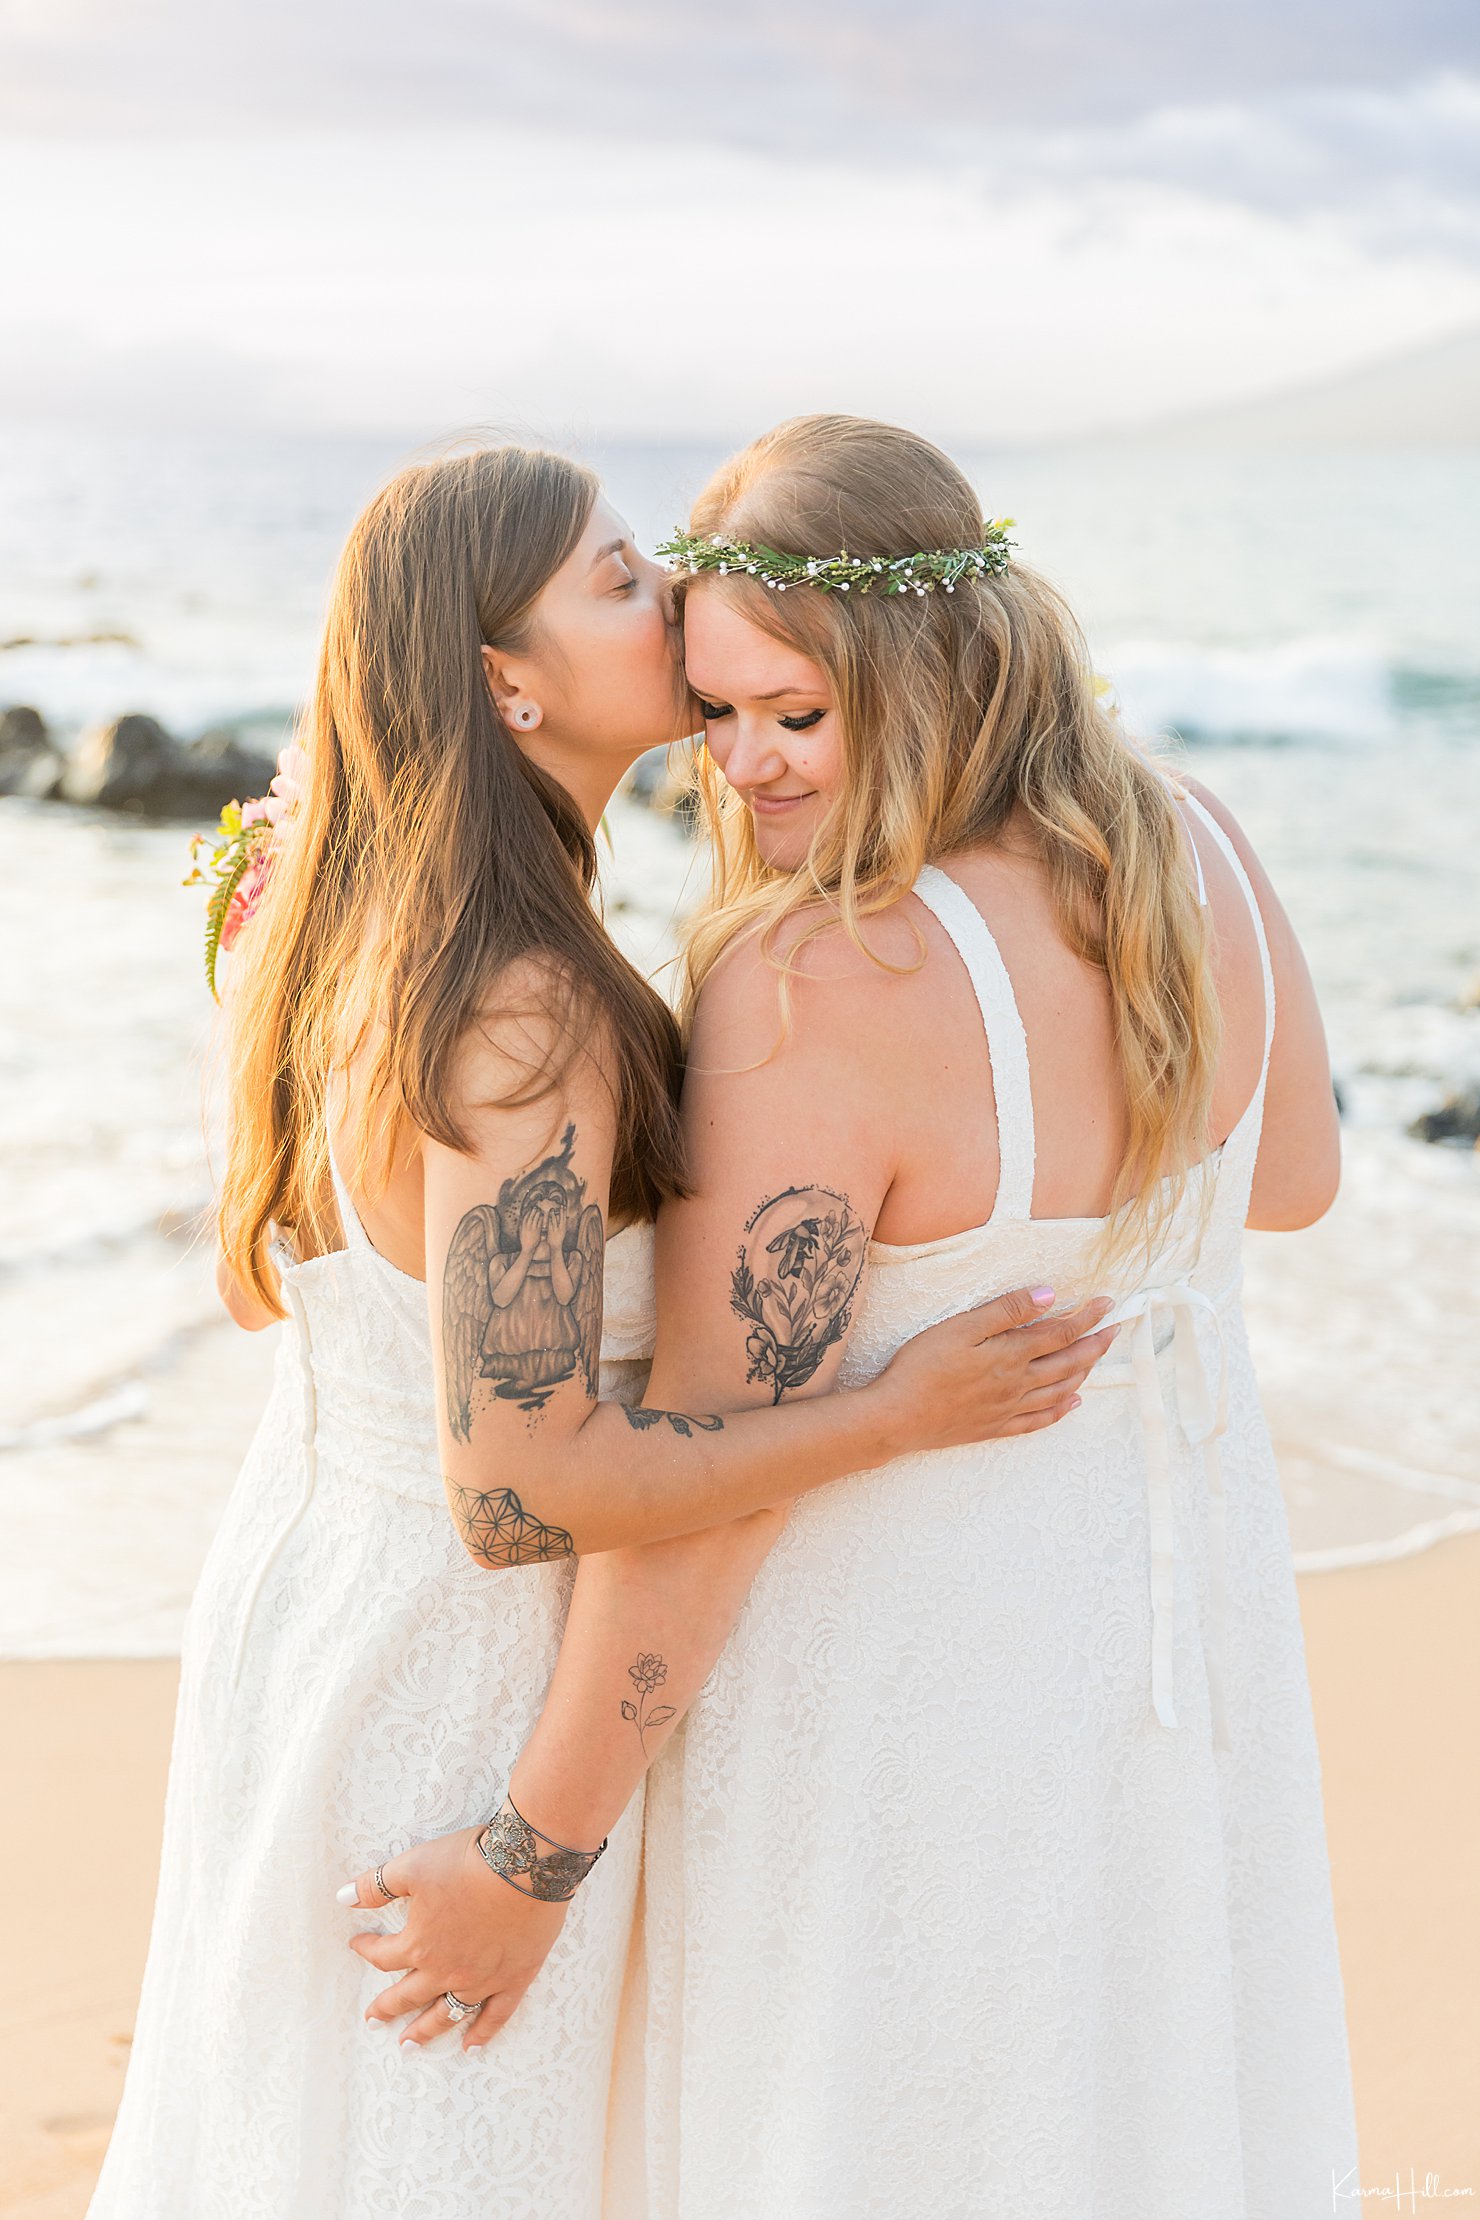 brides on the beach 